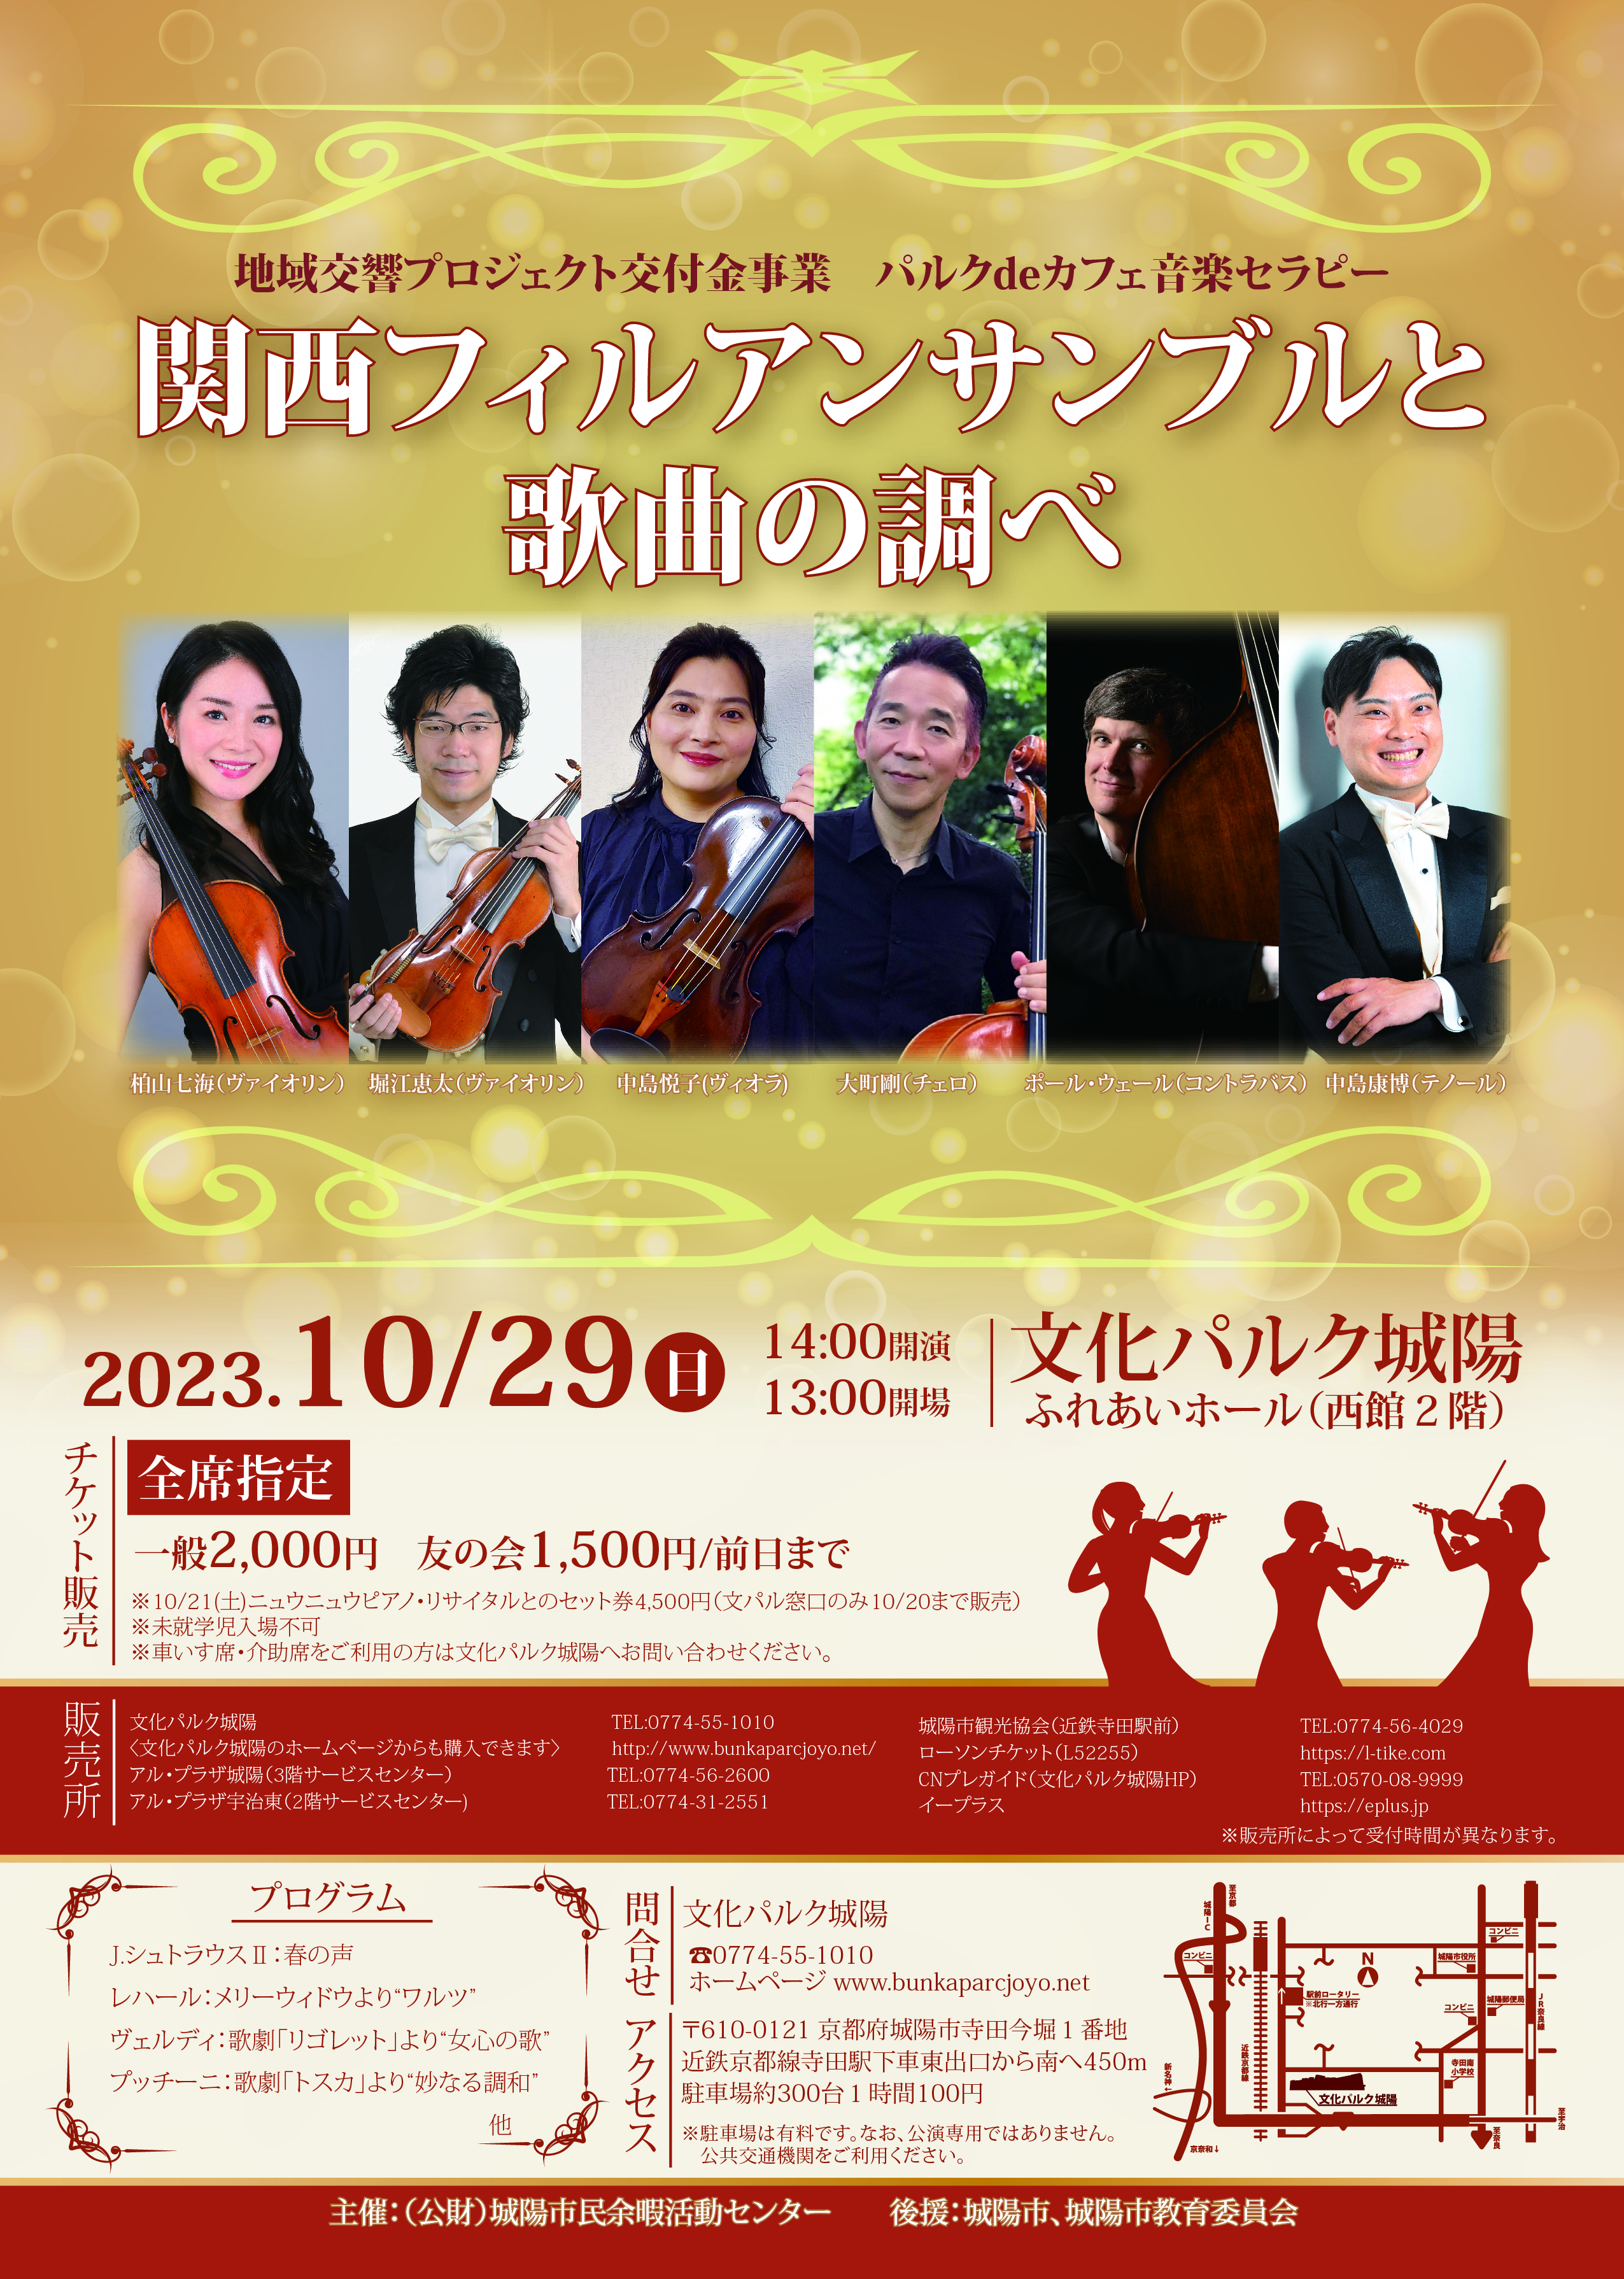 Kansai Philharmonic Ensemble and Songs